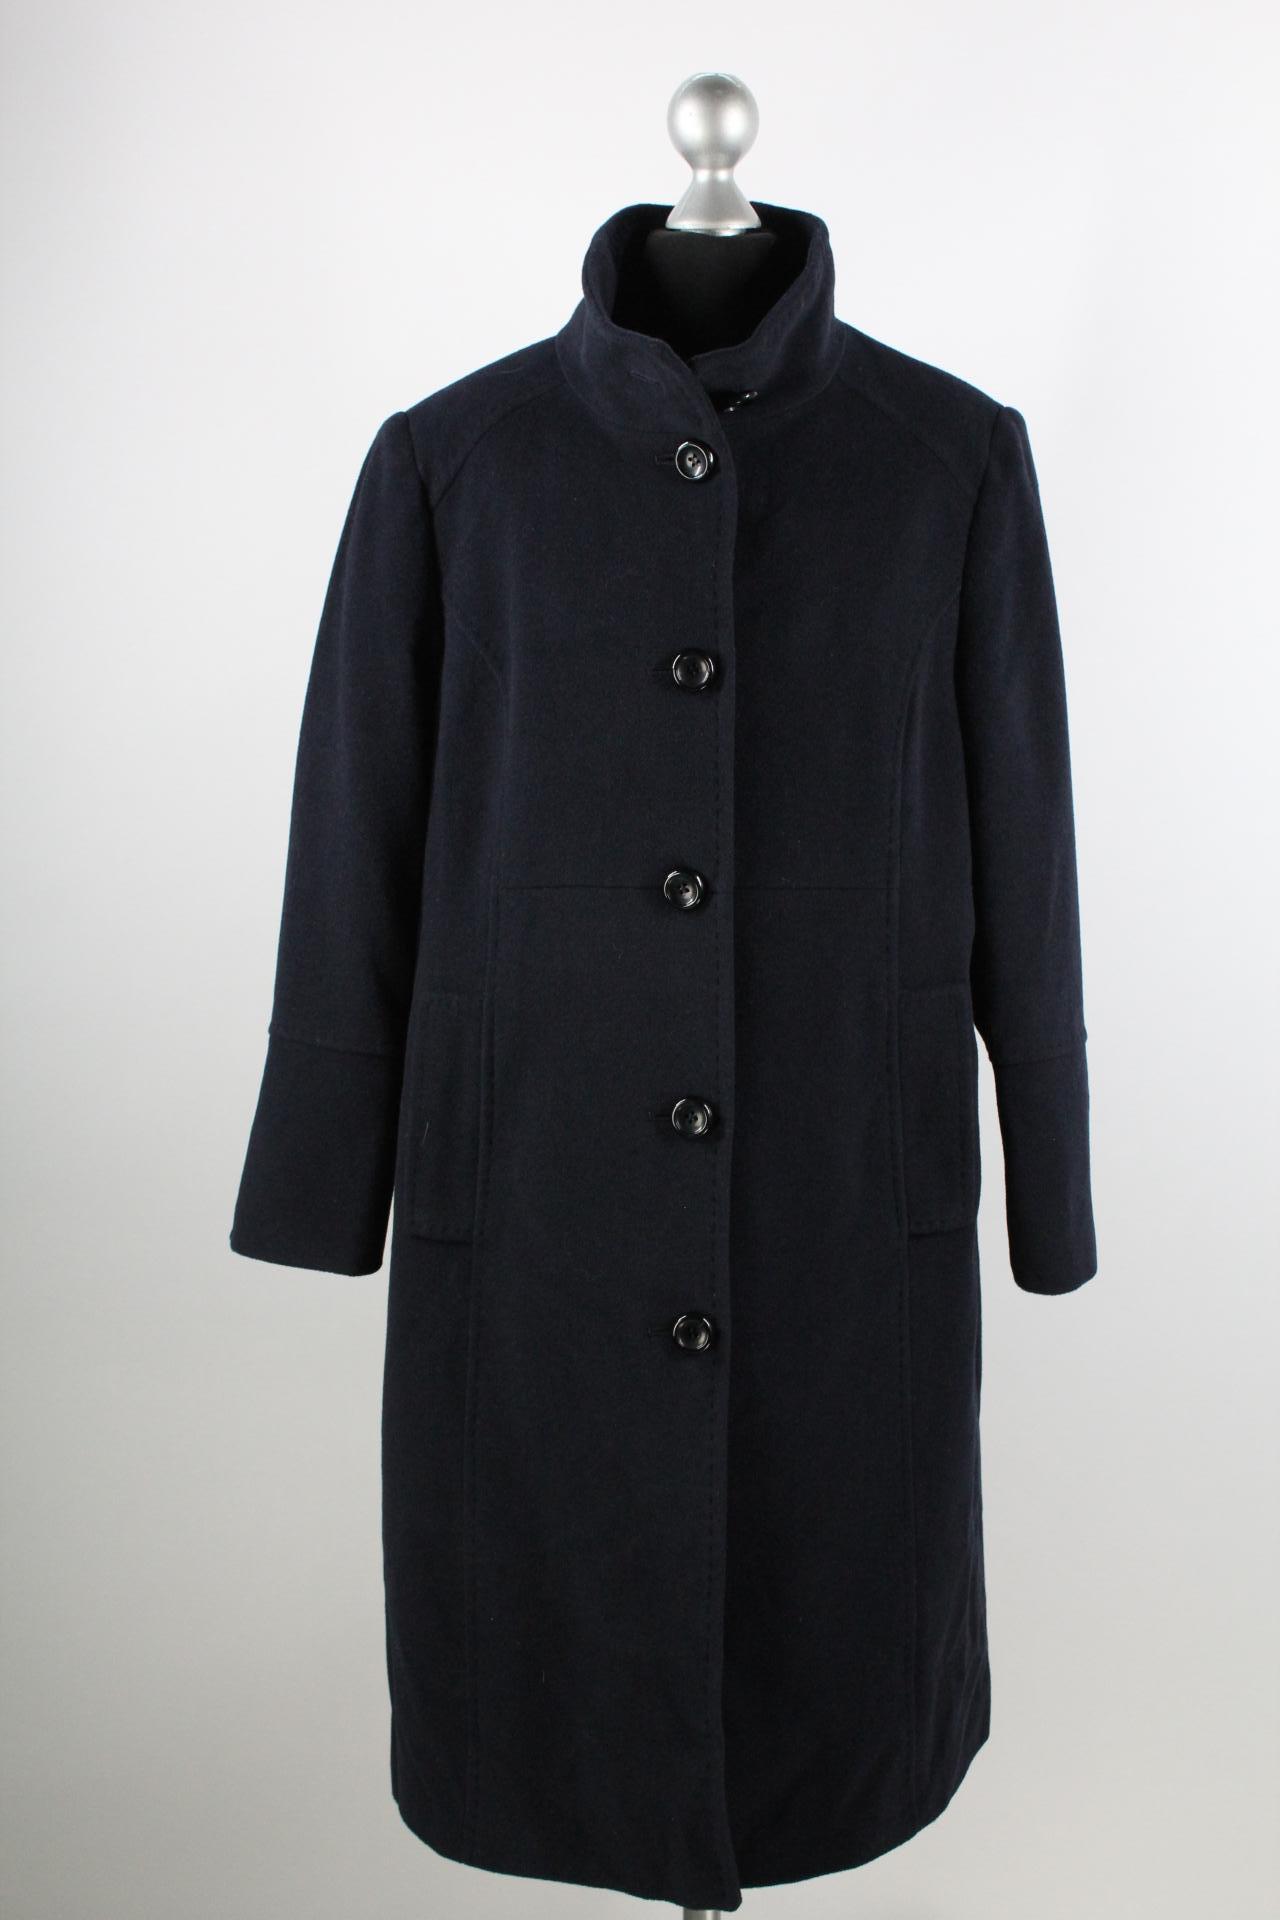 Atelier GS Damen-Mantel blau Größe 20